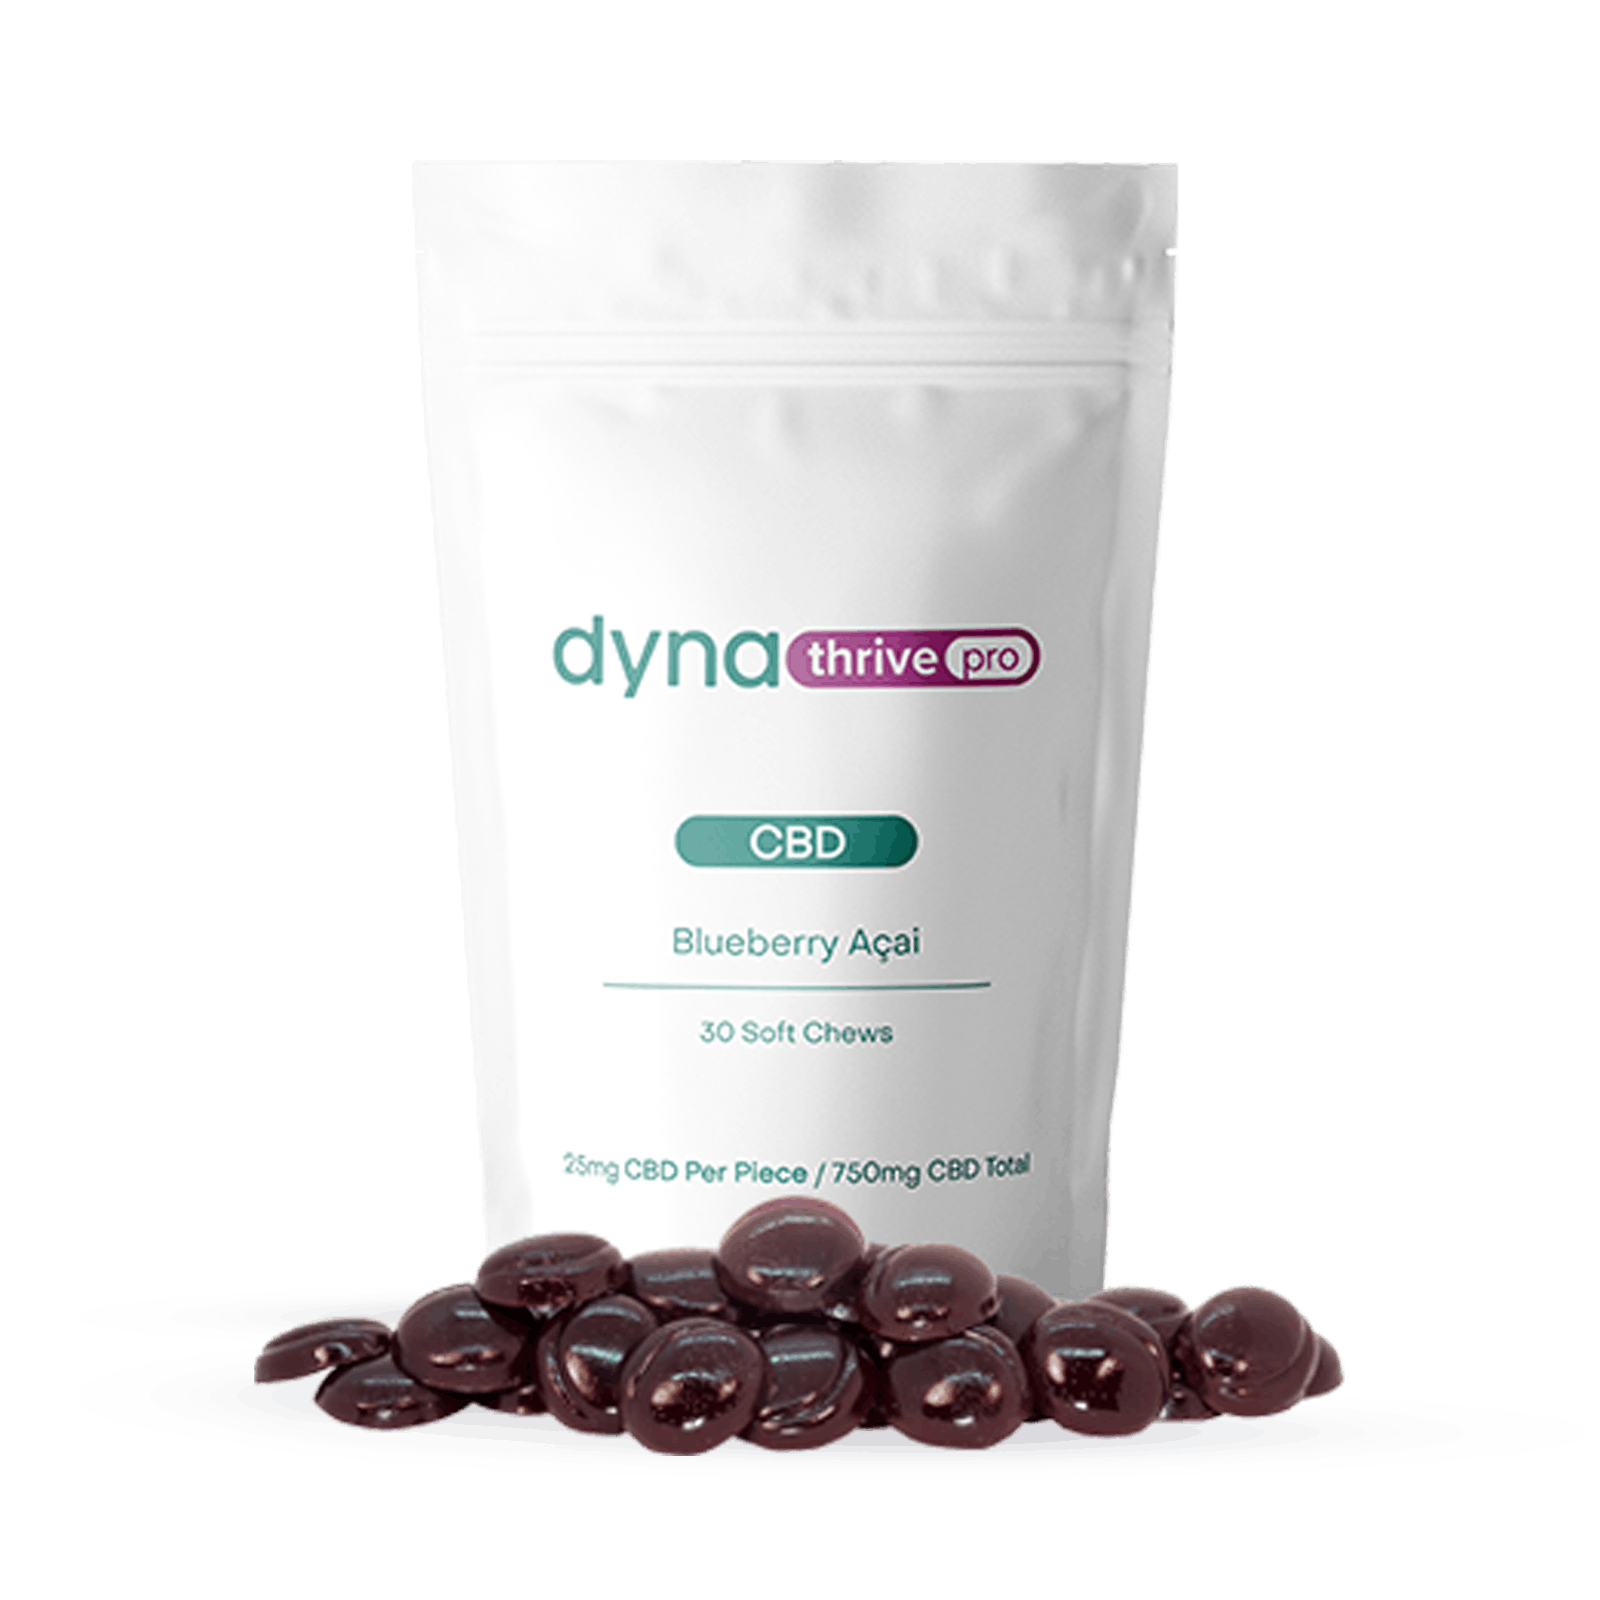 DynaThrive Pro CBD Blueberry Acai Soft Chews 30-pack